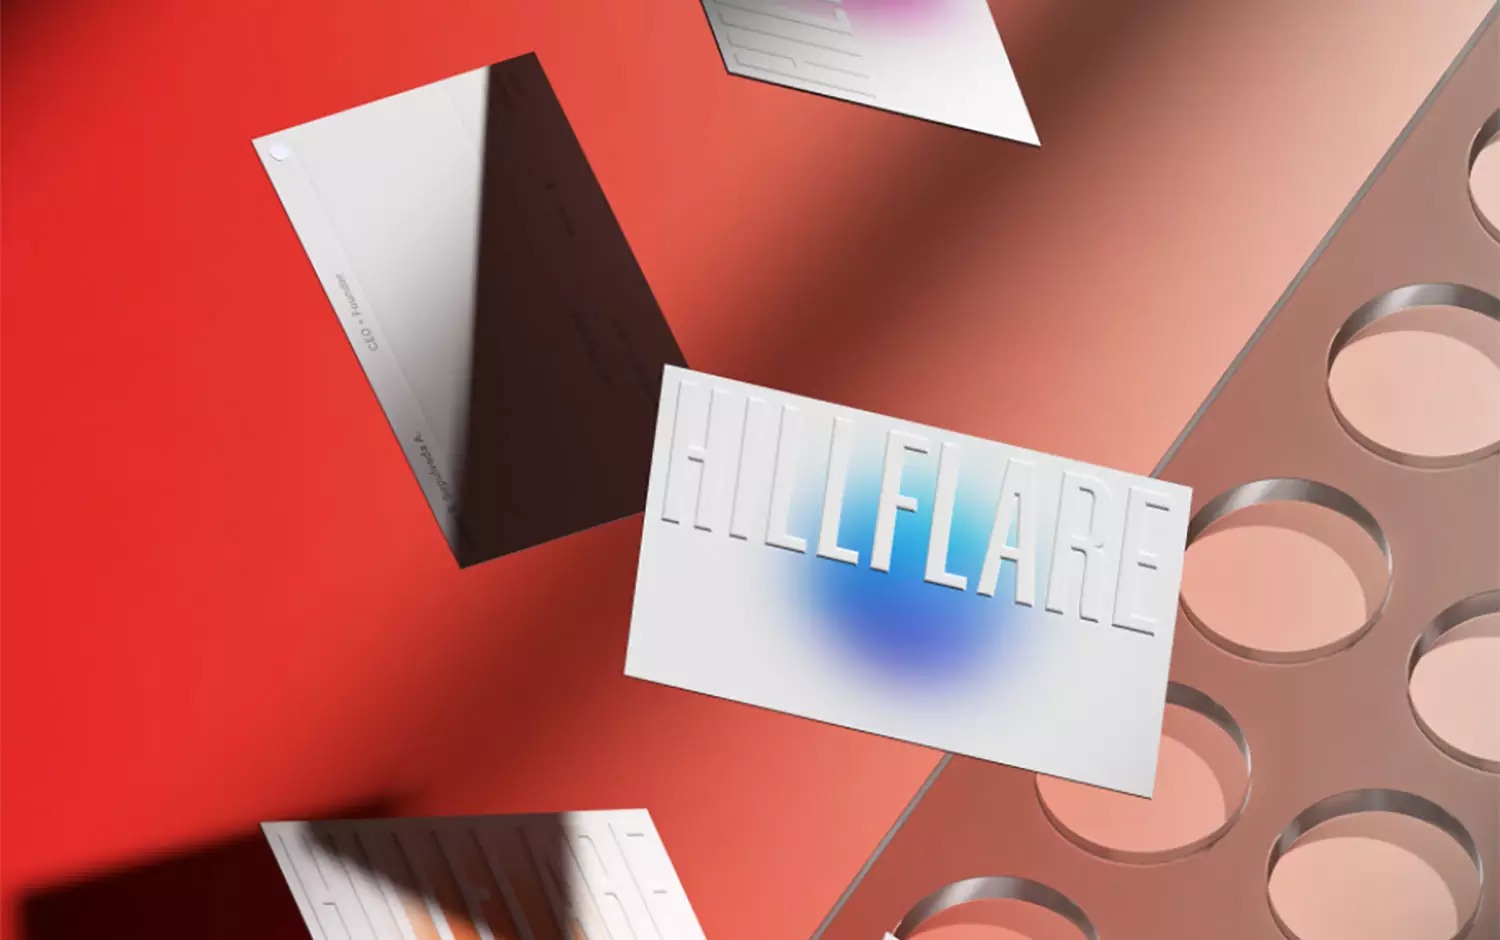 Hillflare初创公司品牌形象设计